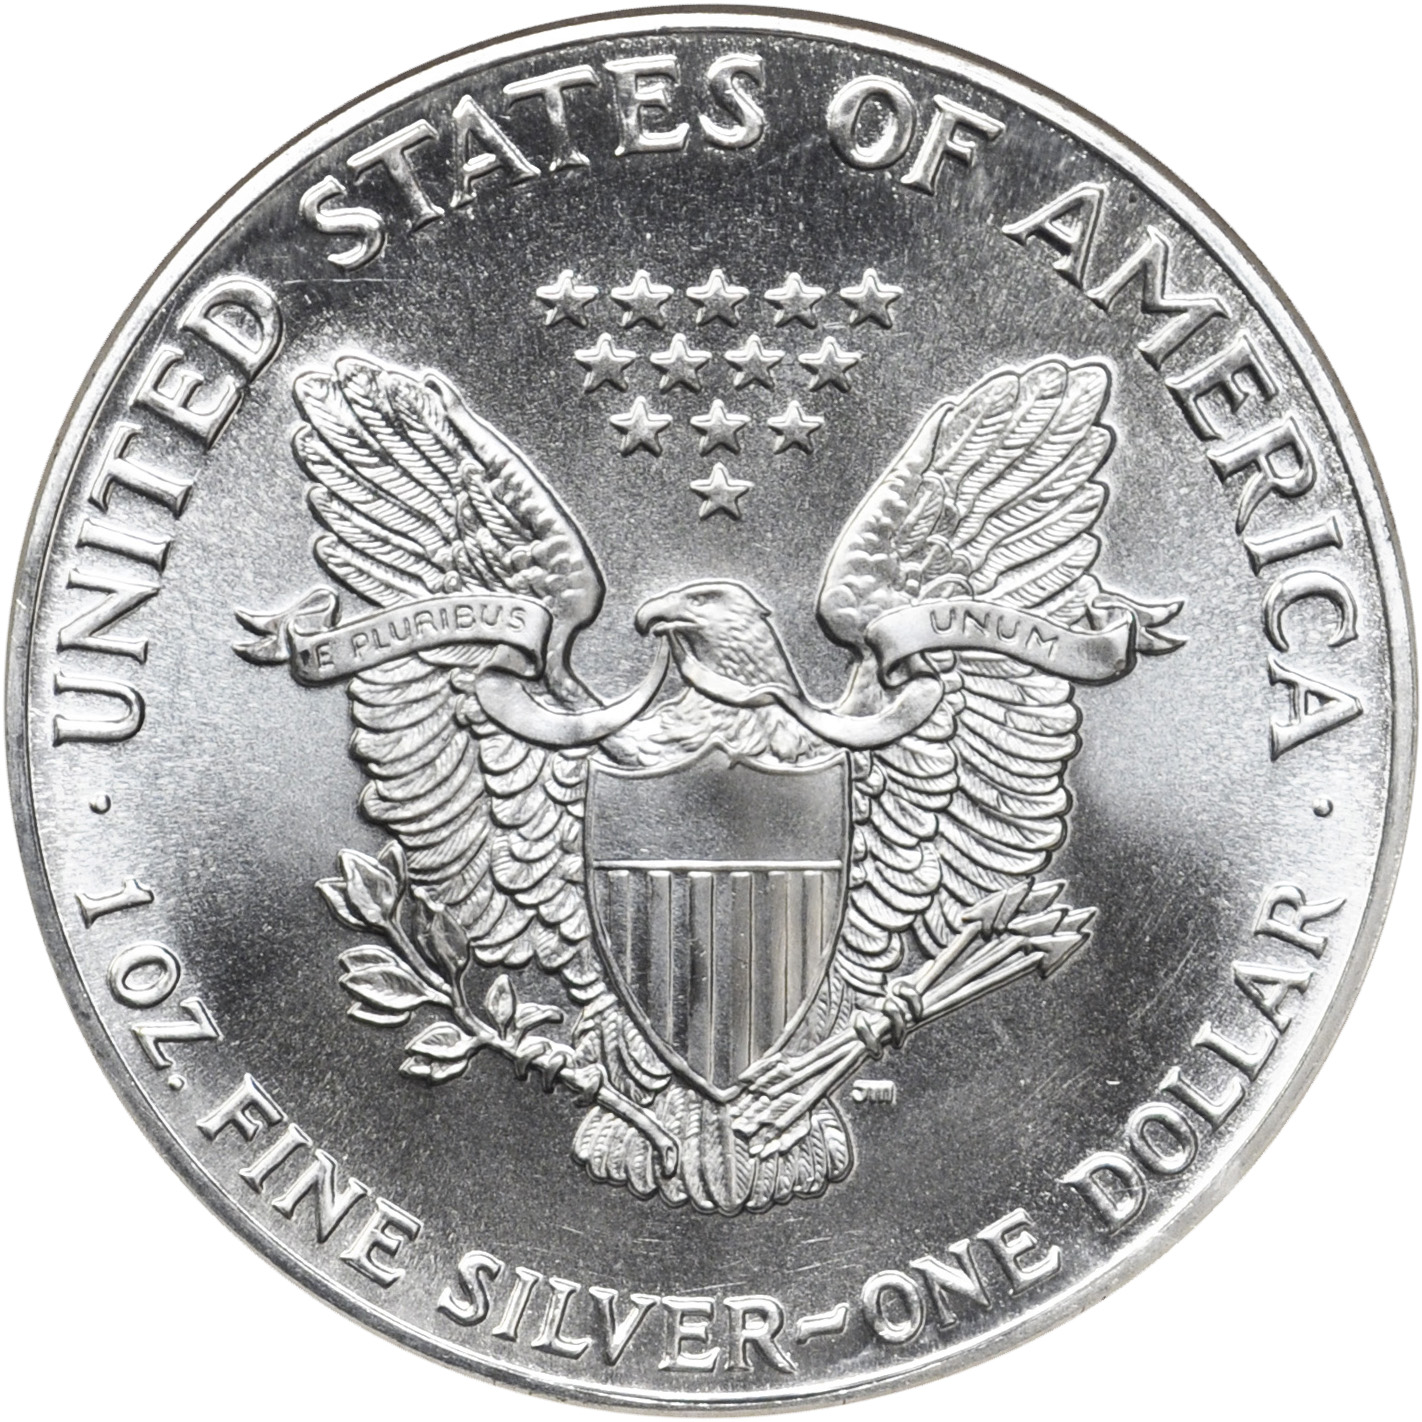 Value of 1988 $1 Silver Coin | American Silver Eagle Coin